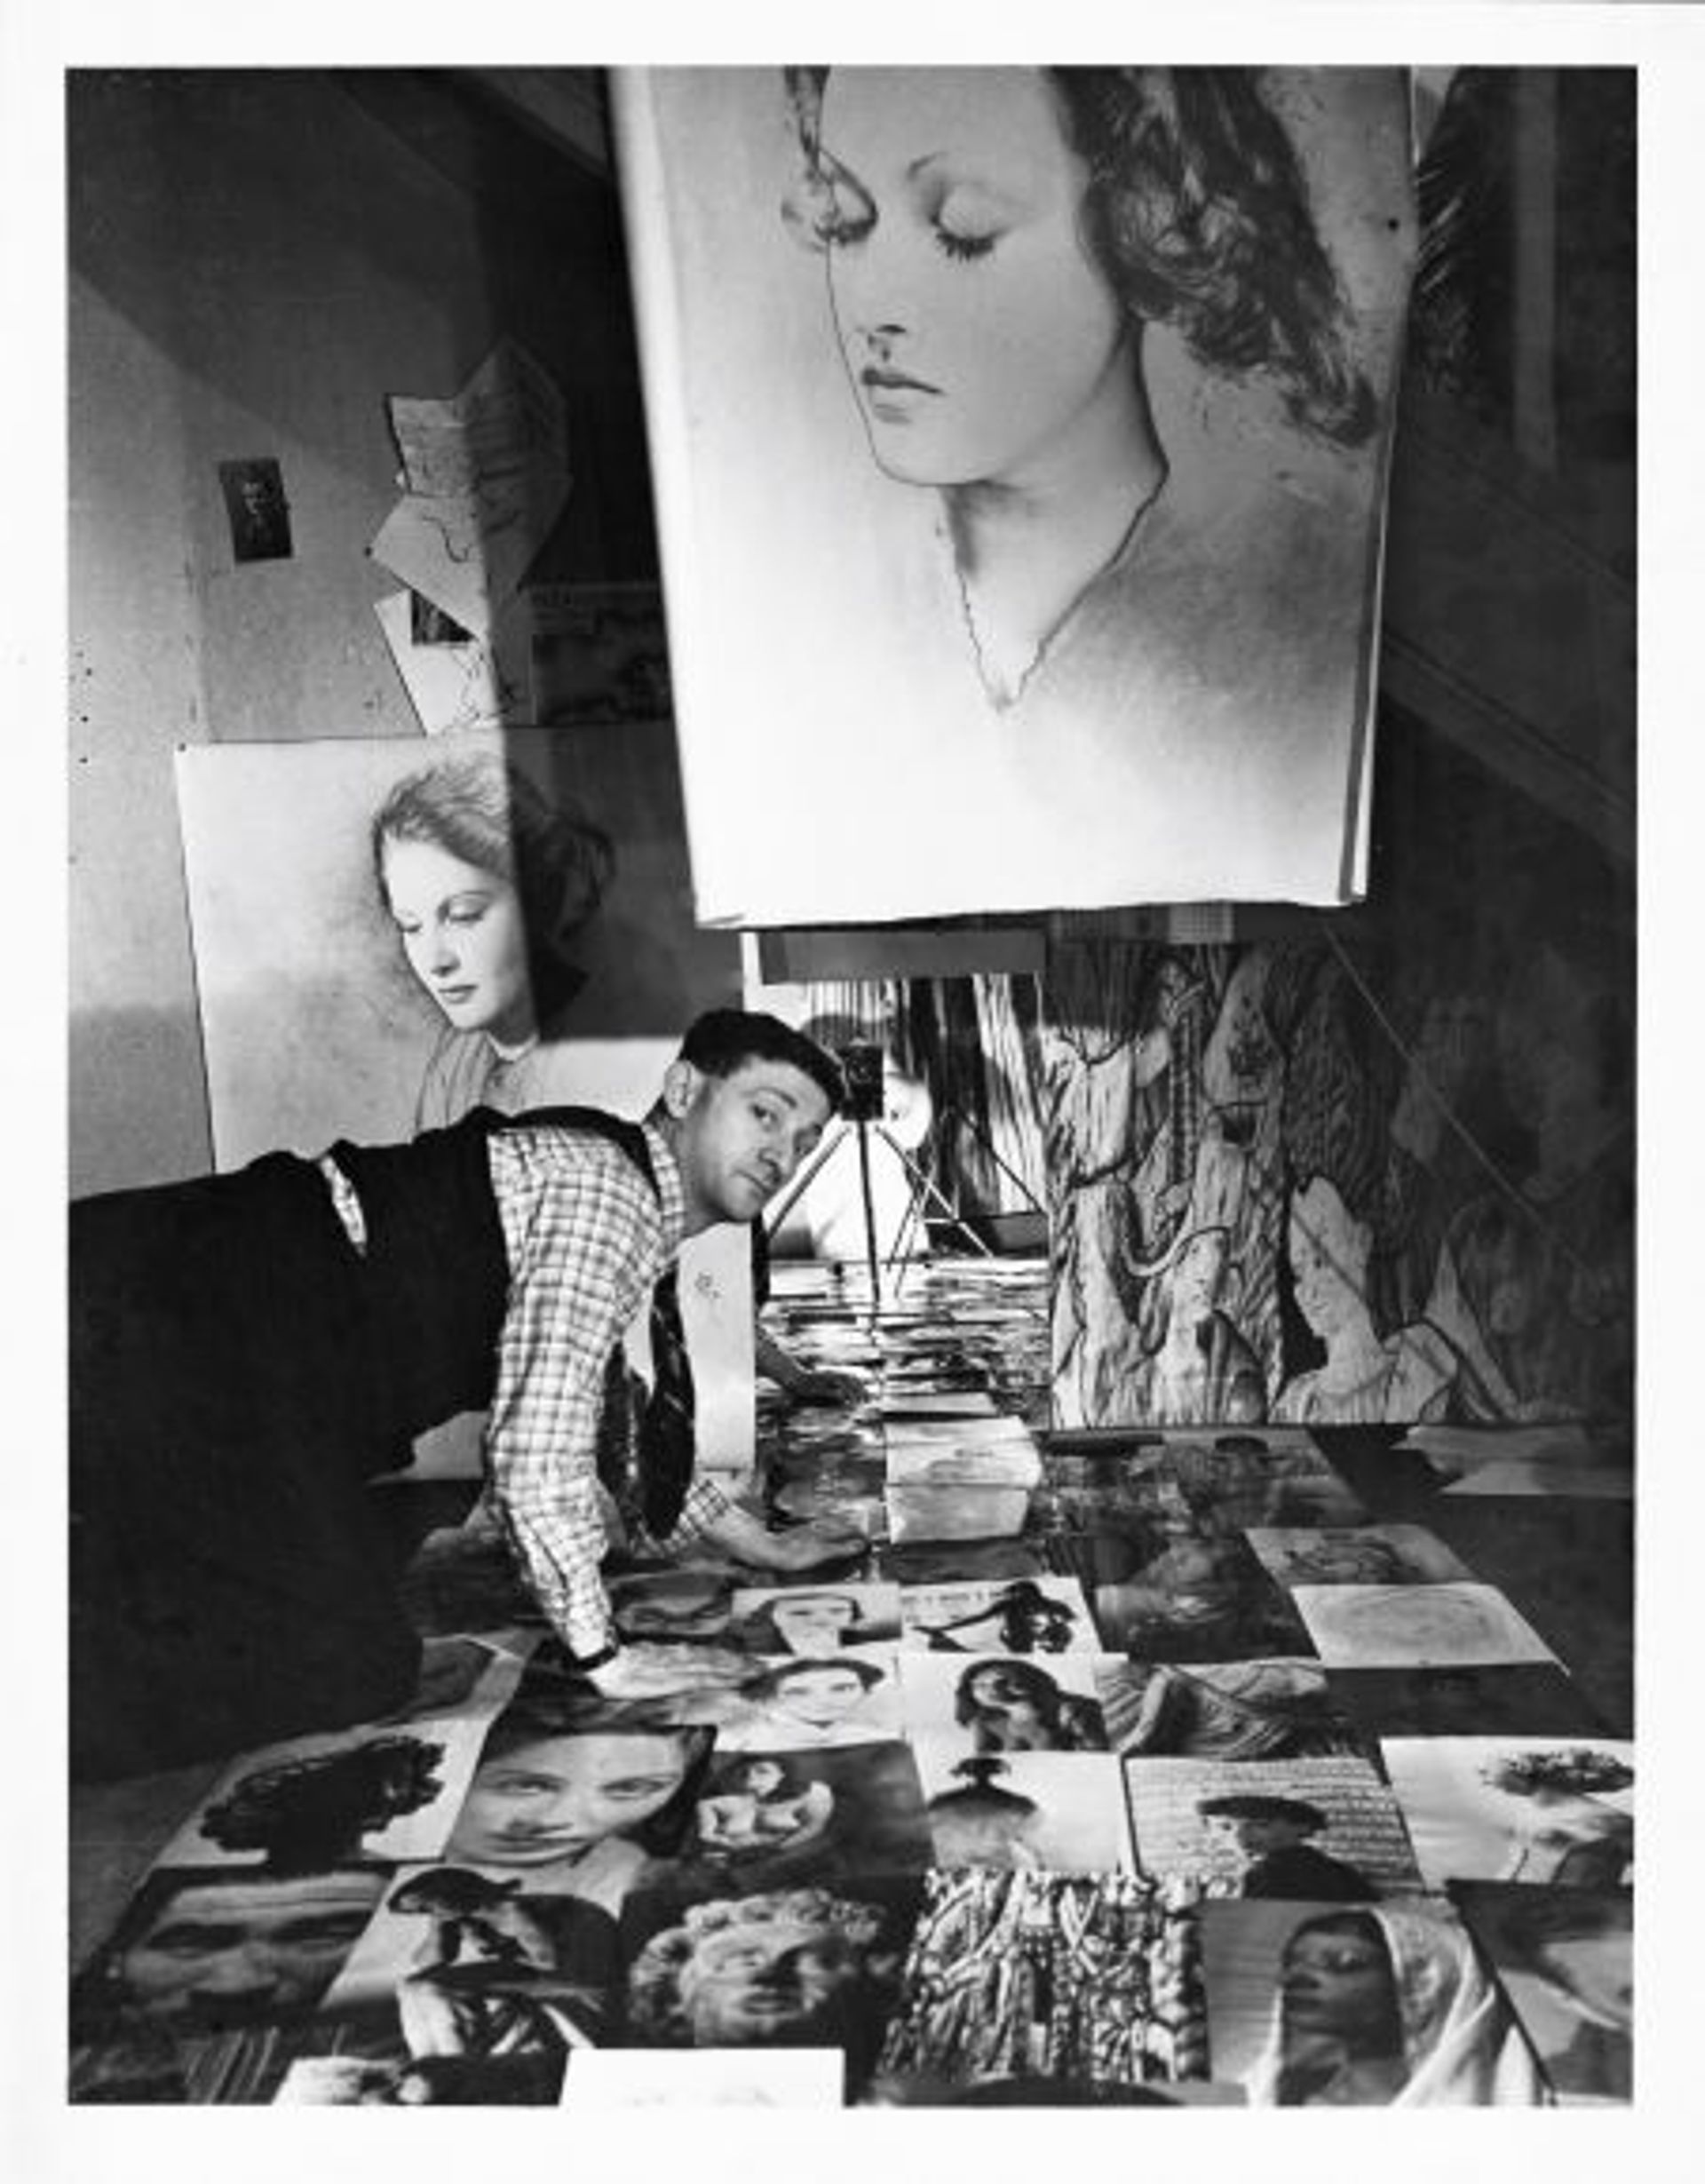 Erwin Blumenfeld, Self-Portrait in the Photography Studio of the rue Delambre, Paris, 1939, photographie noir et blanc. 

© The Estate of Erwin Blumenfeld 2022